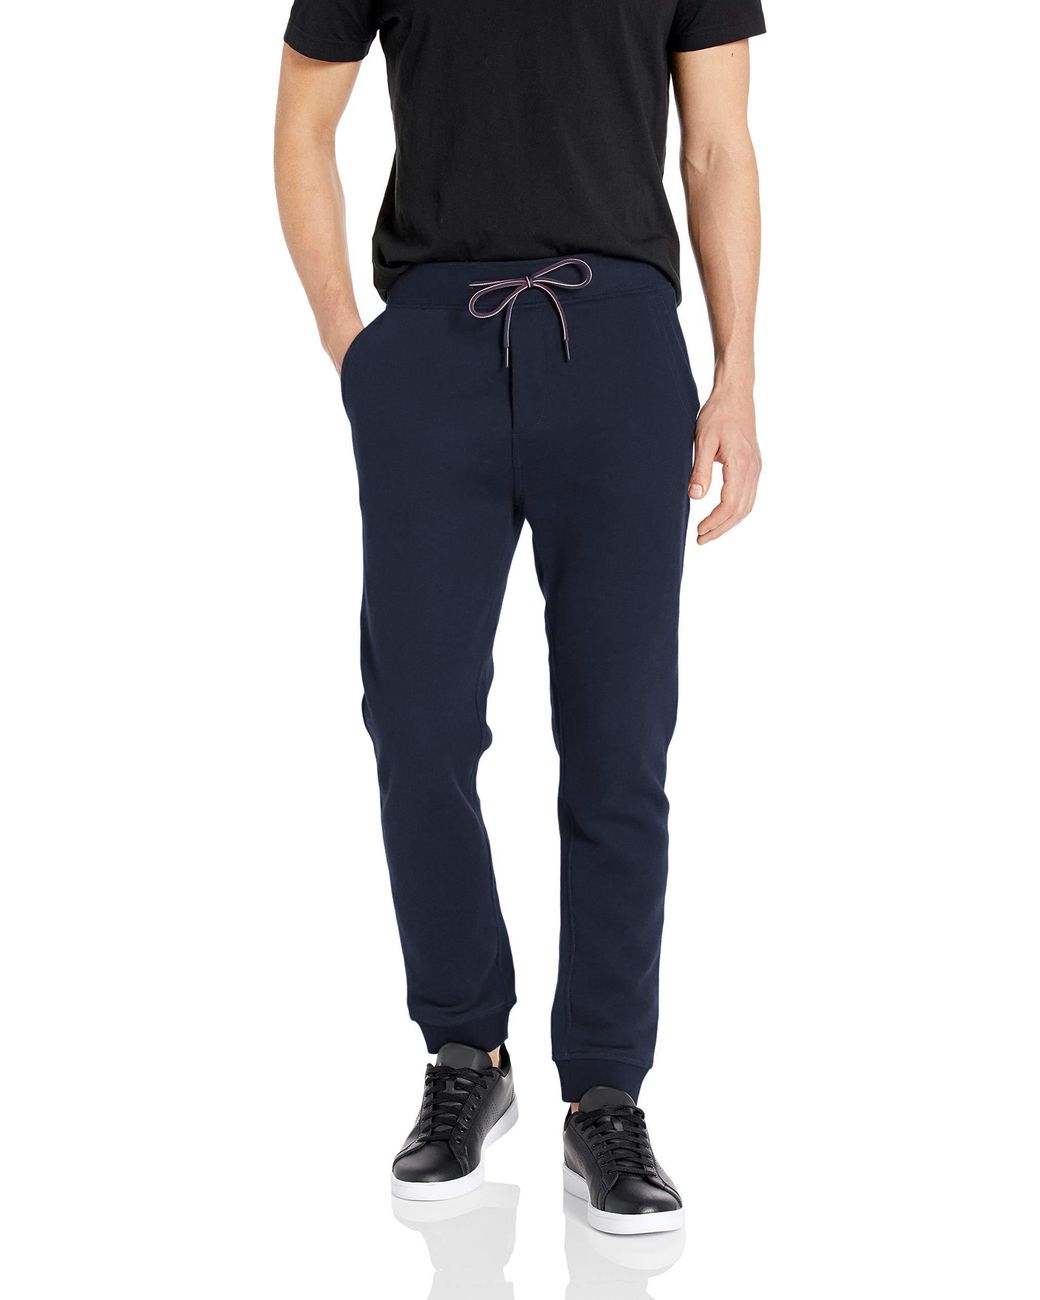 Tommy Hilfiger Jogger Sweatpants in Blue for Men - Save 45% - Lyst